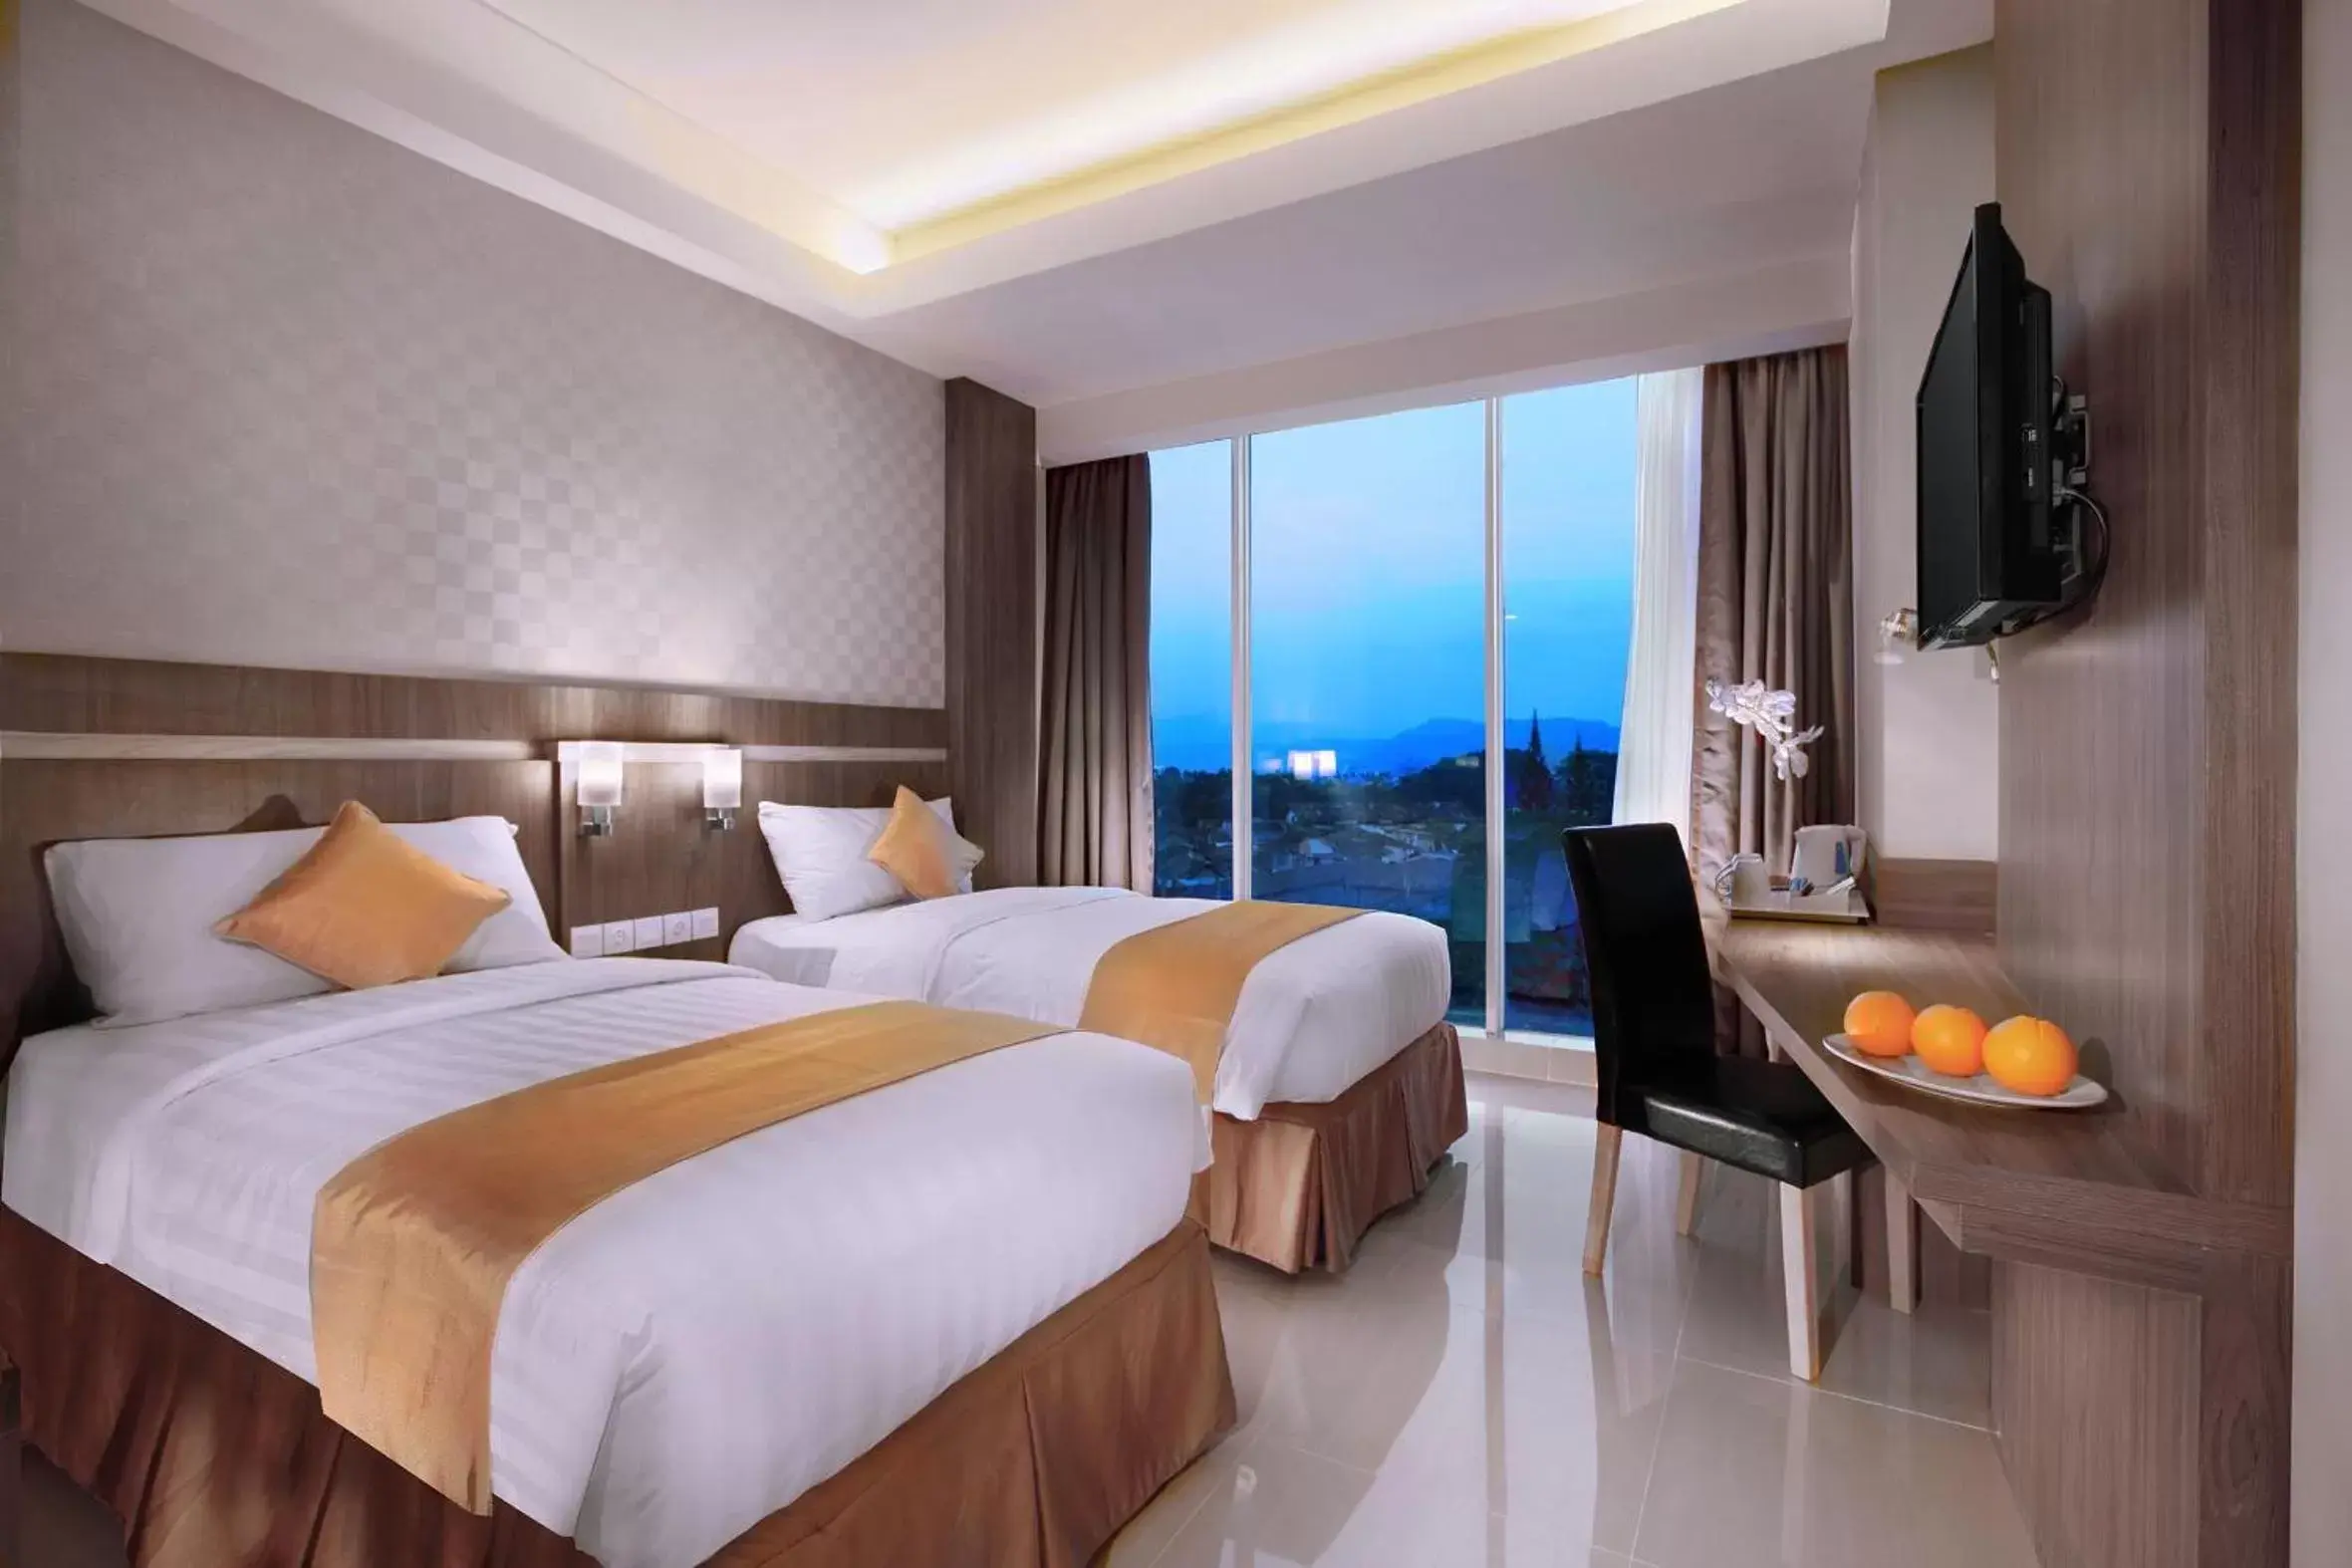 Bedroom in ASTON Lampung City Hotel